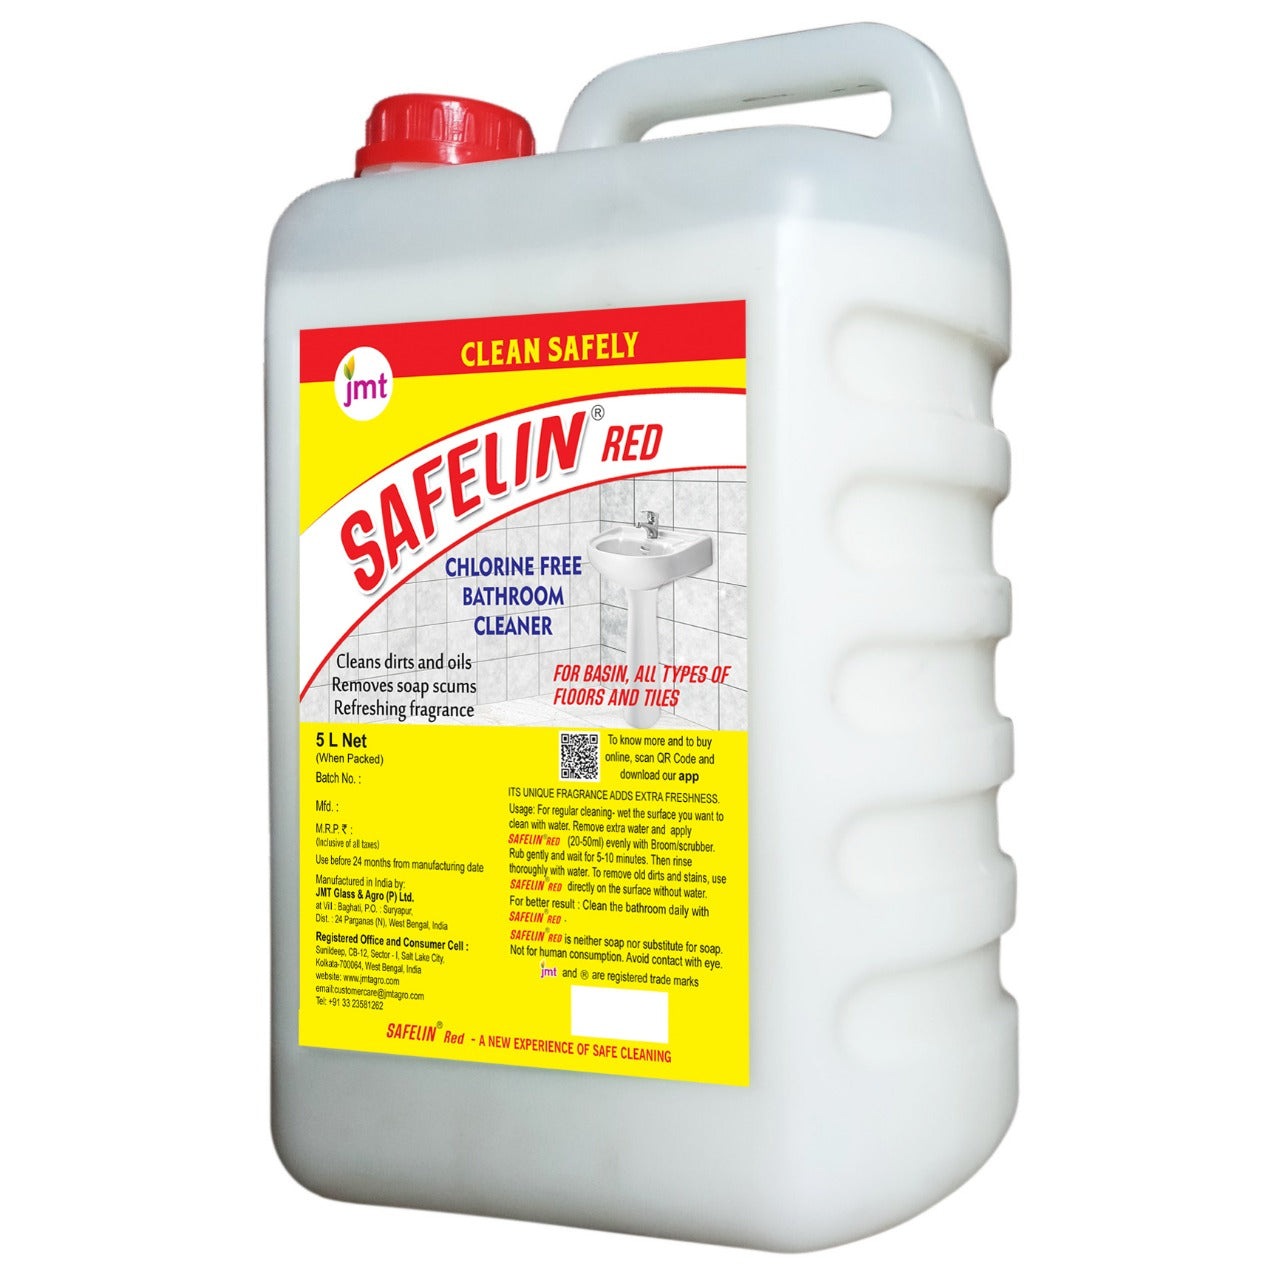 5L  Safelin Red Chlorine Free Regular Use Bathroom Cleaner for All Types of Bathroom Floors, Tiles and Basins